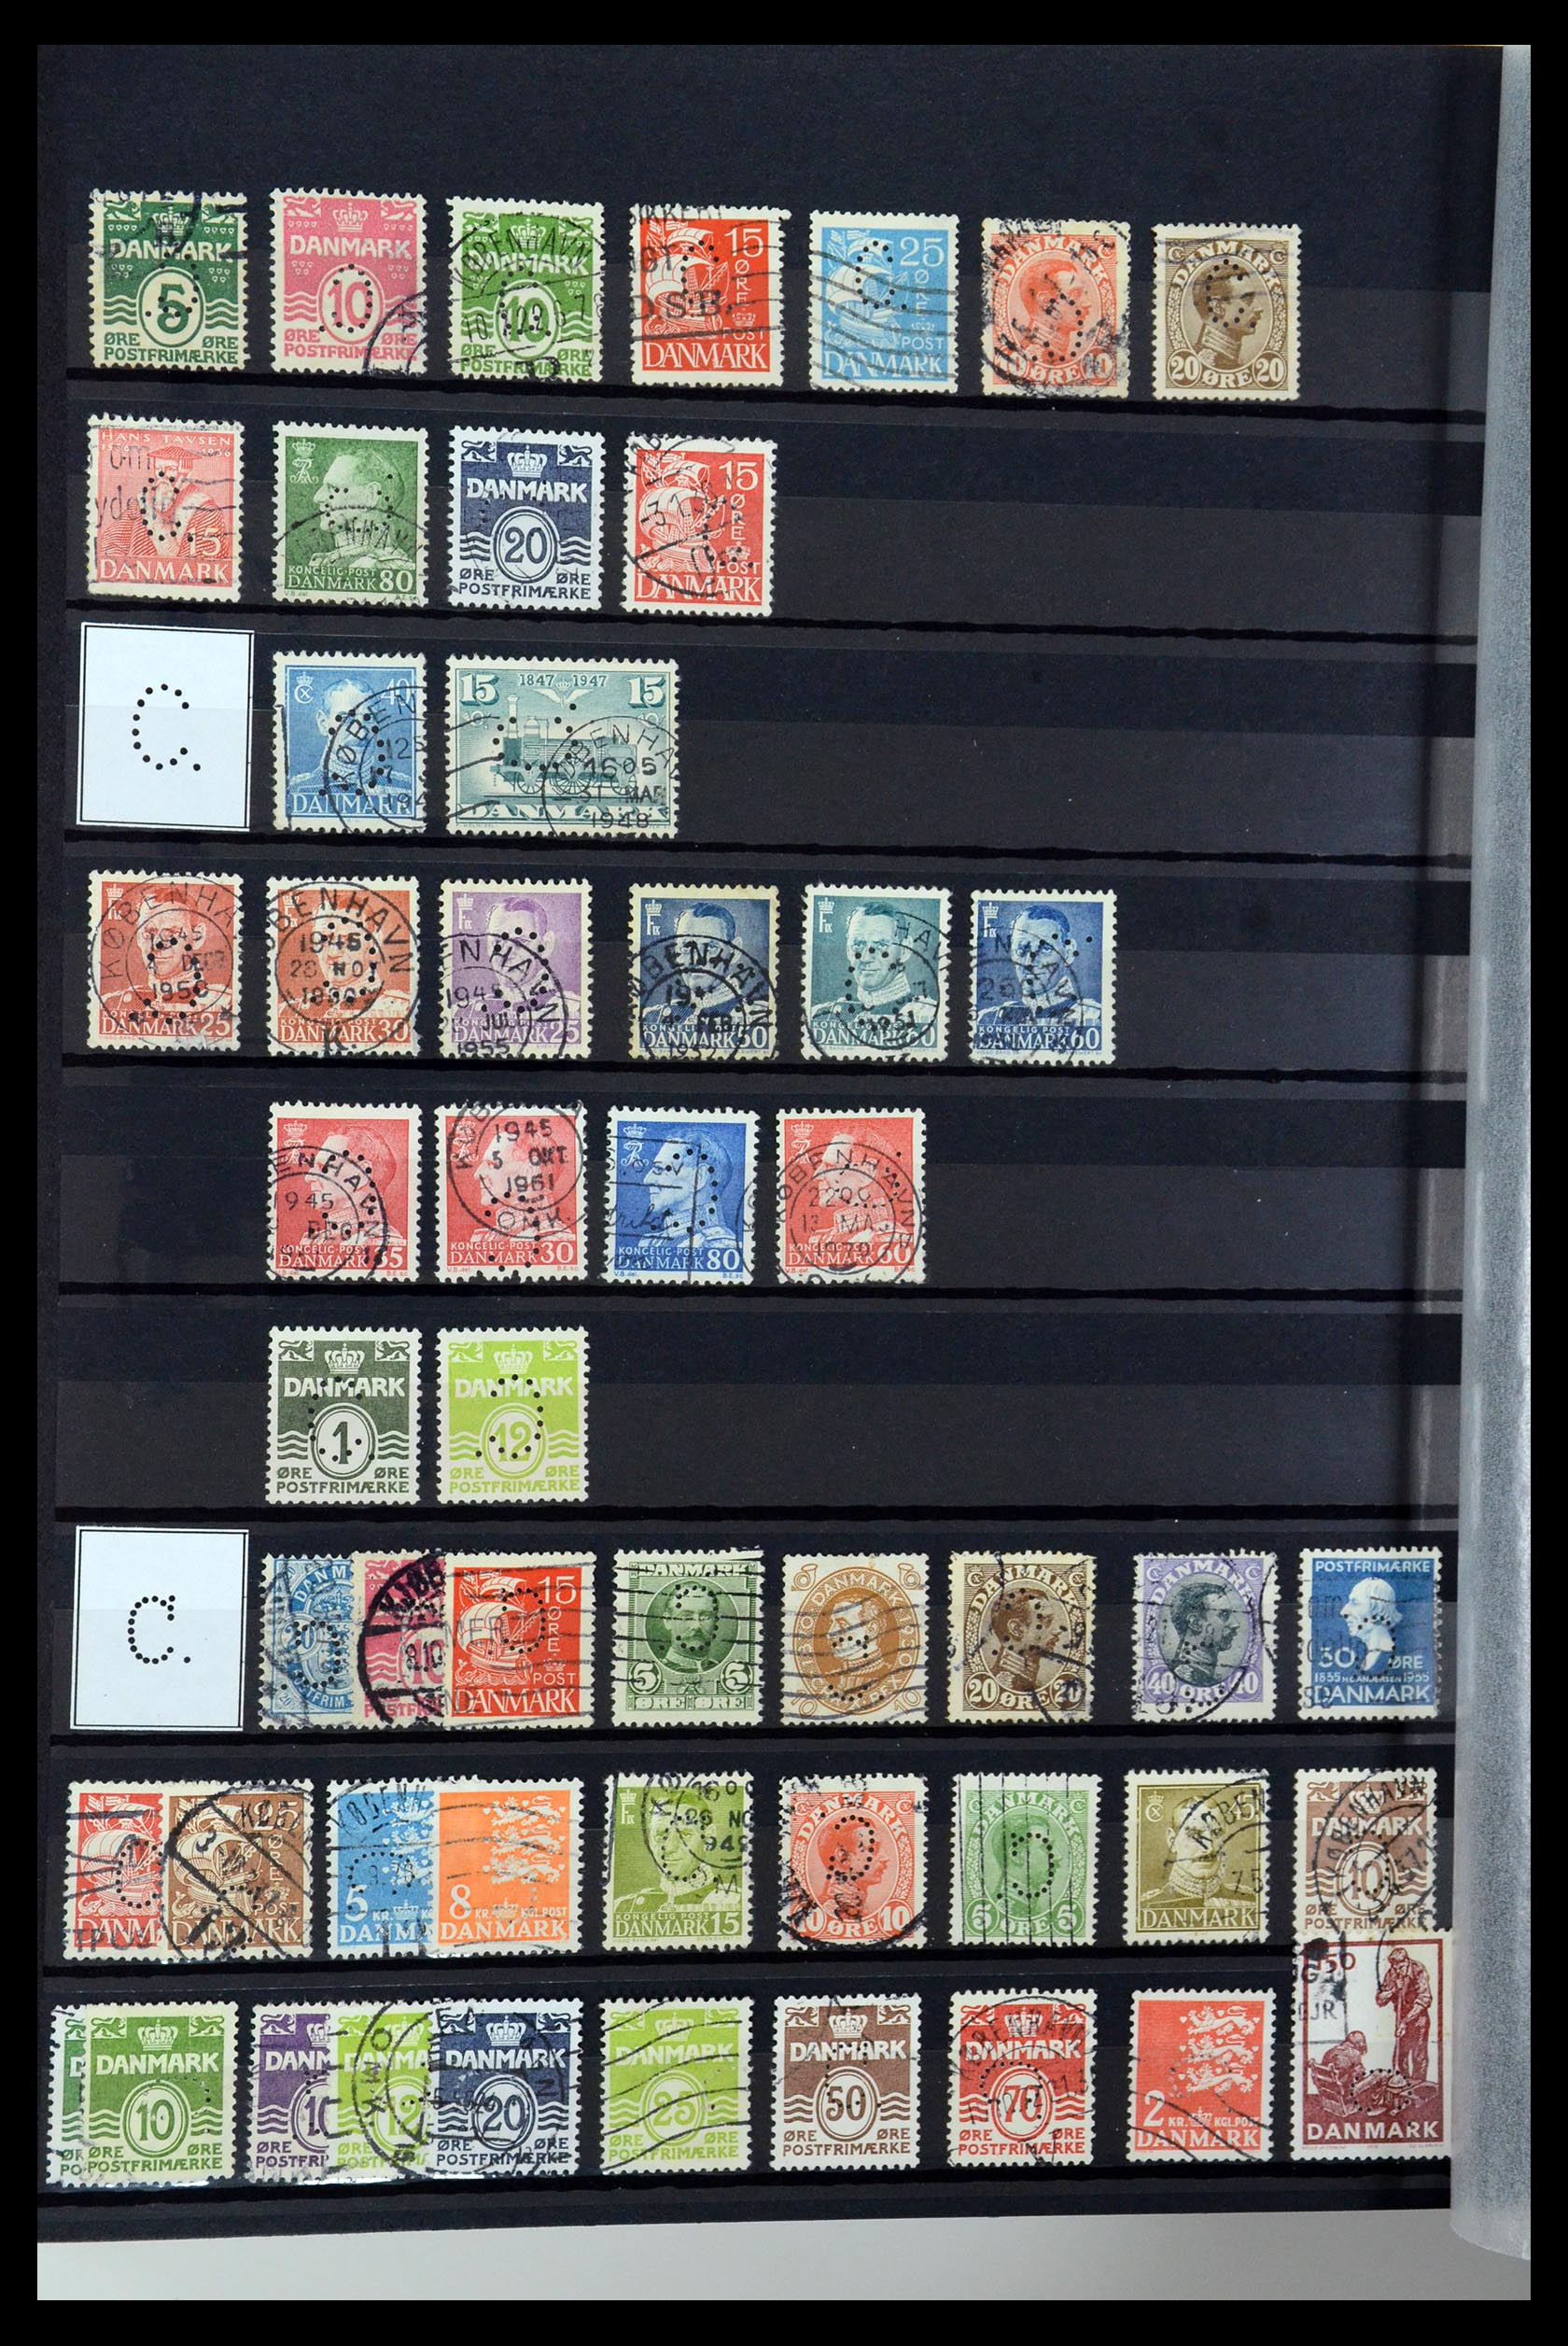 36396 022 - Stamp collection 36396 Denmark perfins.